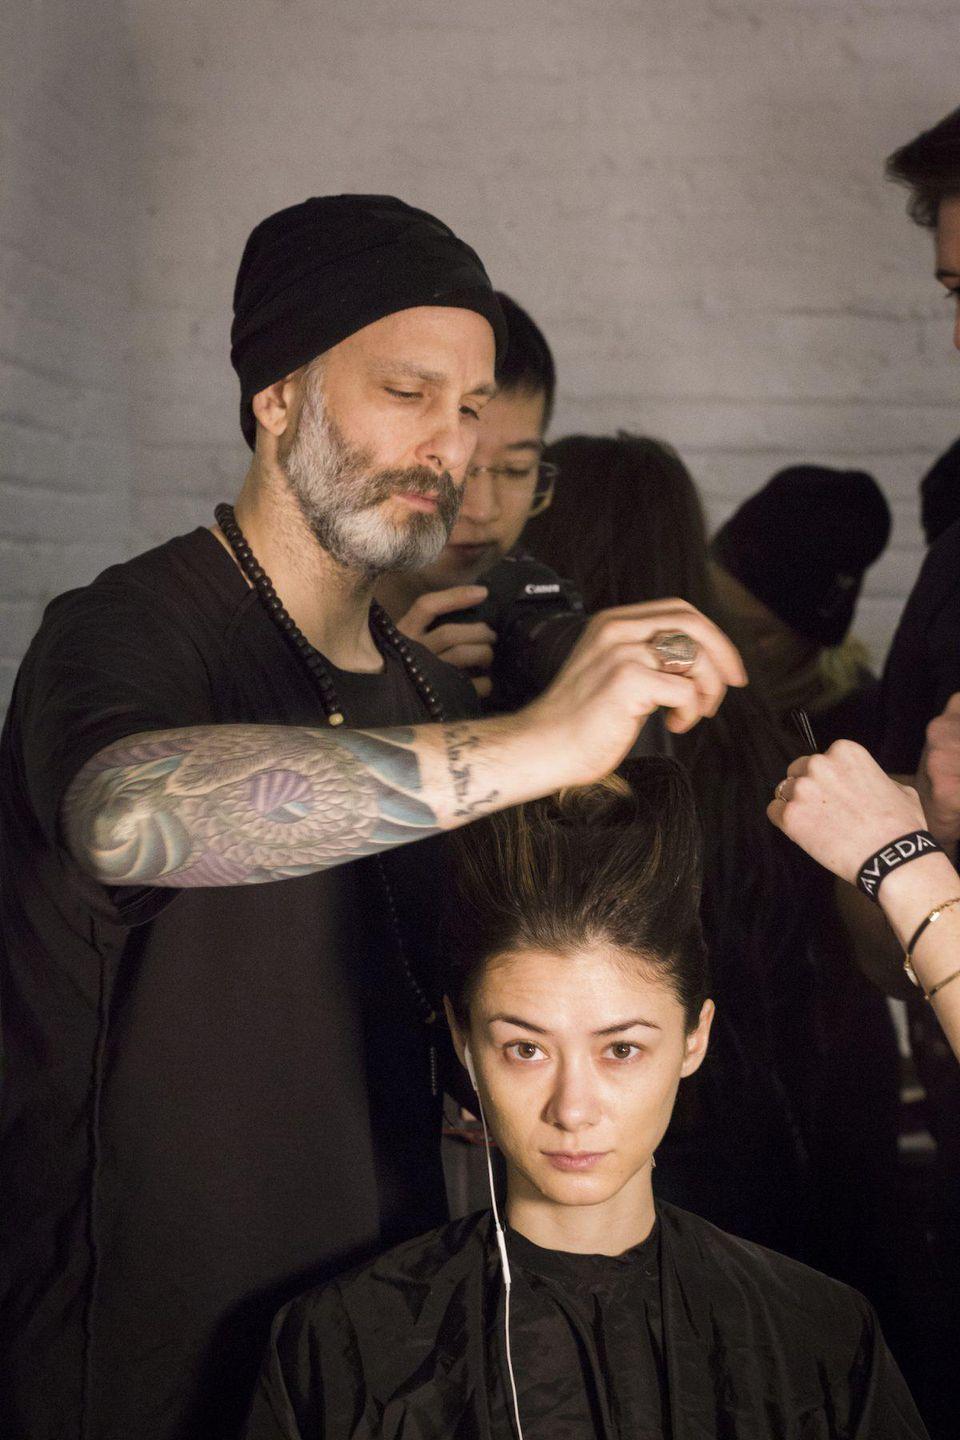 Jon Reyman styling models backstage PHOTO CREDIT: CAROLINE CUSE https://www.forbes.